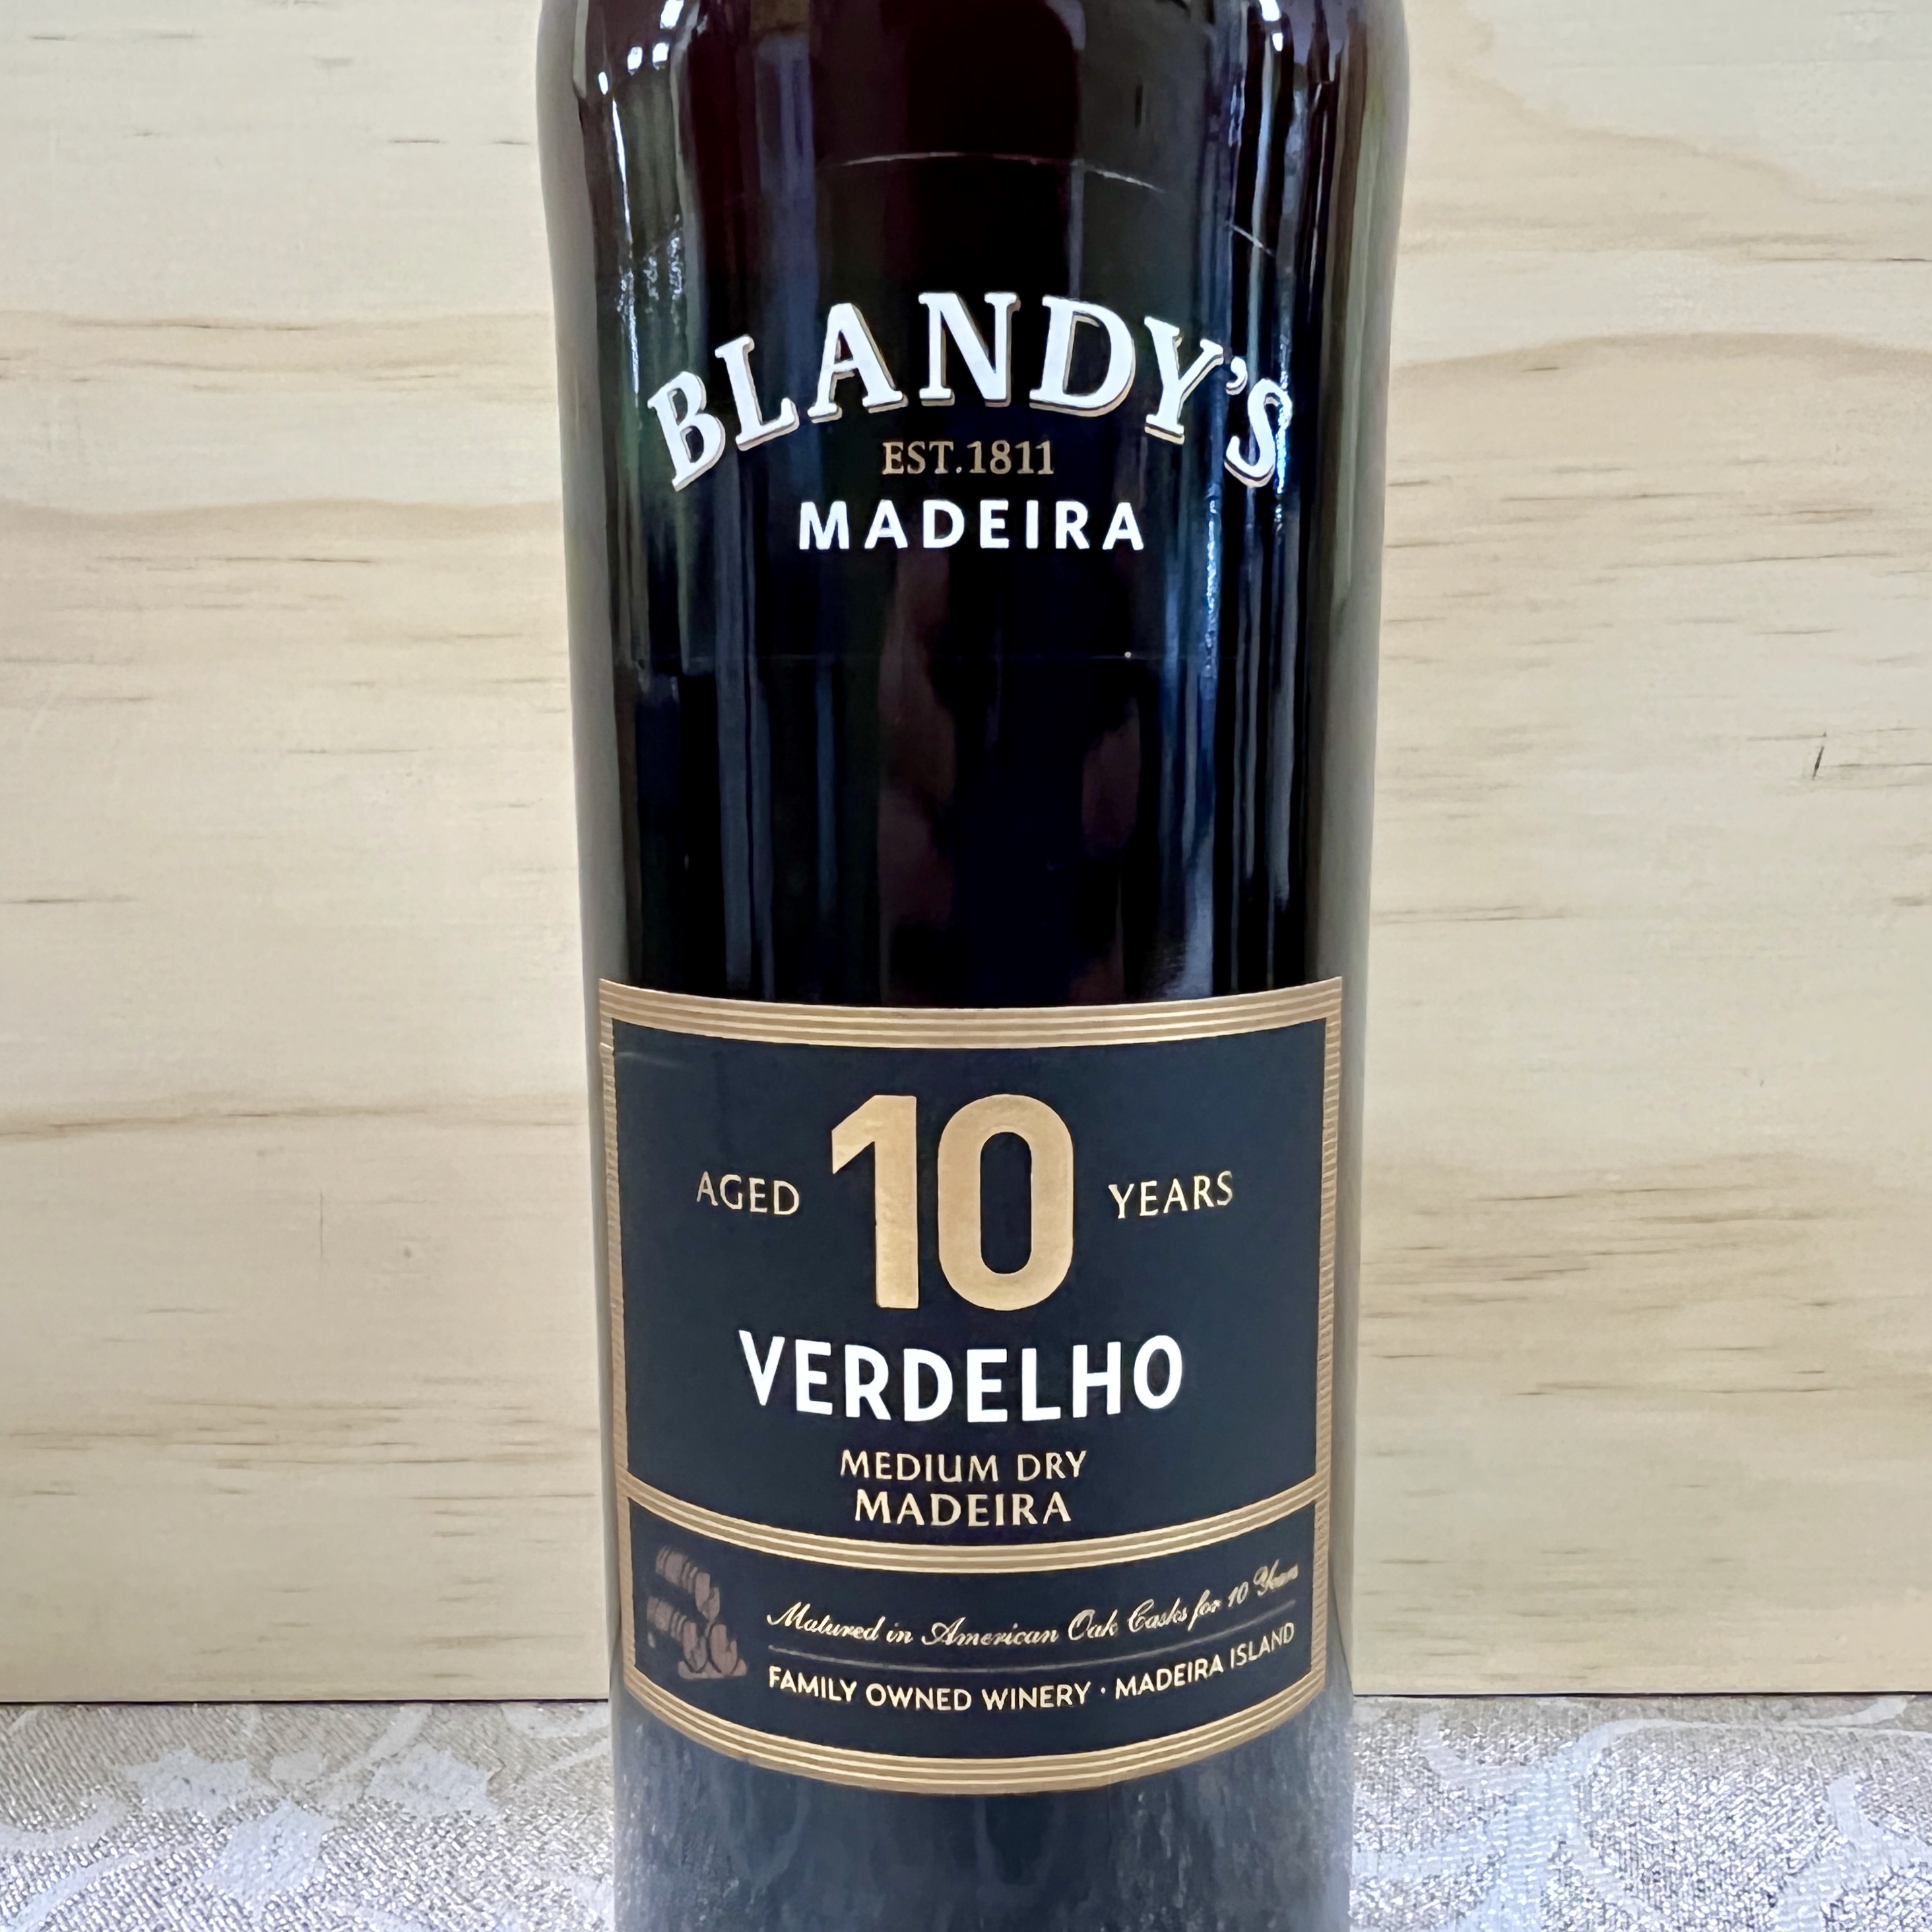 Blandy's Verdelho 10 years aged Medium Dry Madeira 500ml